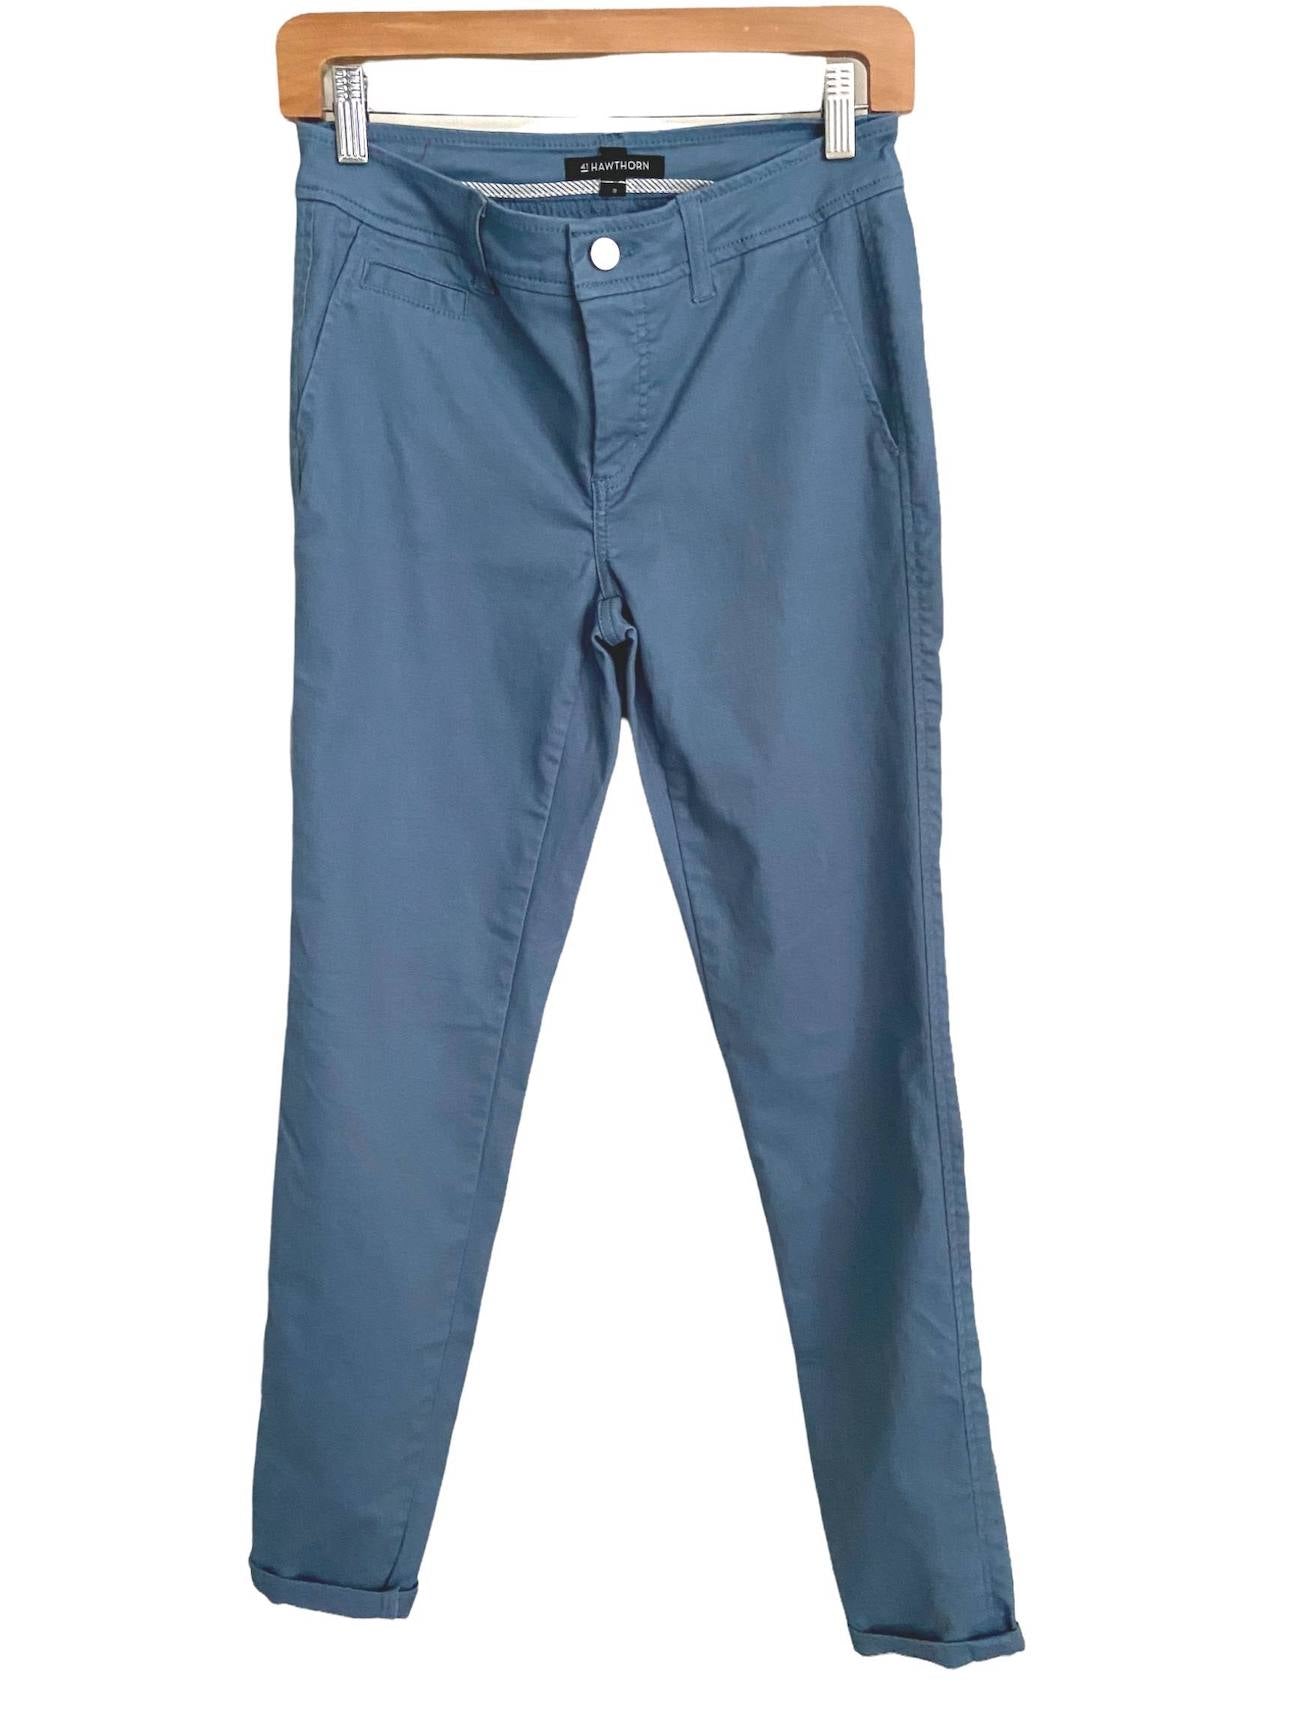 Soft Summer 41 HAWTHORNE blue pants